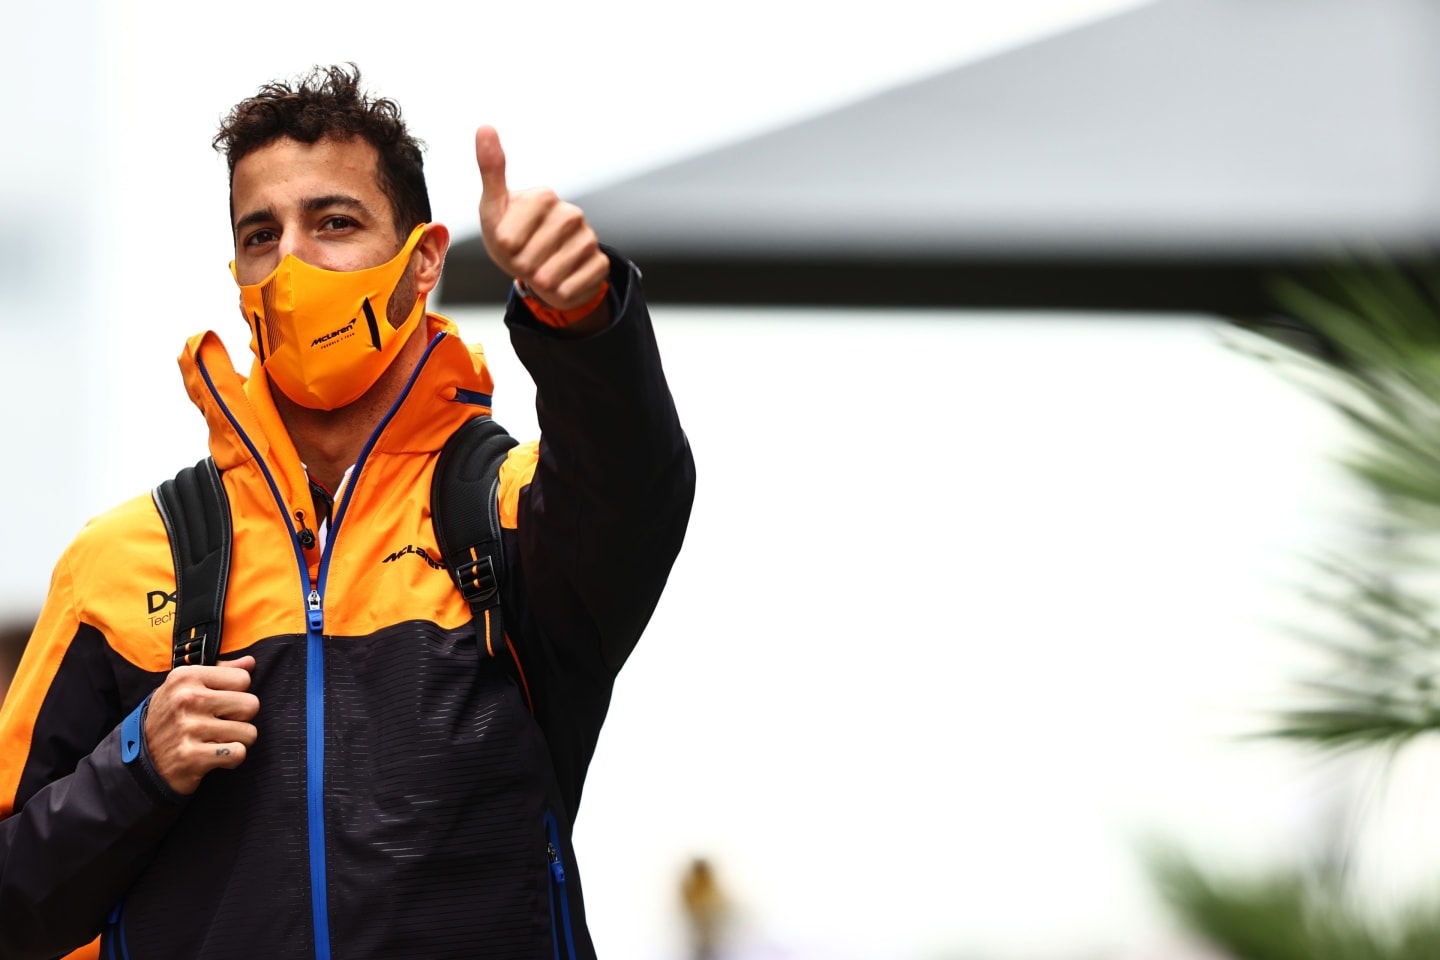 SOCHI, RUSSIA - SEPTEMBER 24: Daniel Ricciardo of Australia and McLaren F1 walks in the Paddock